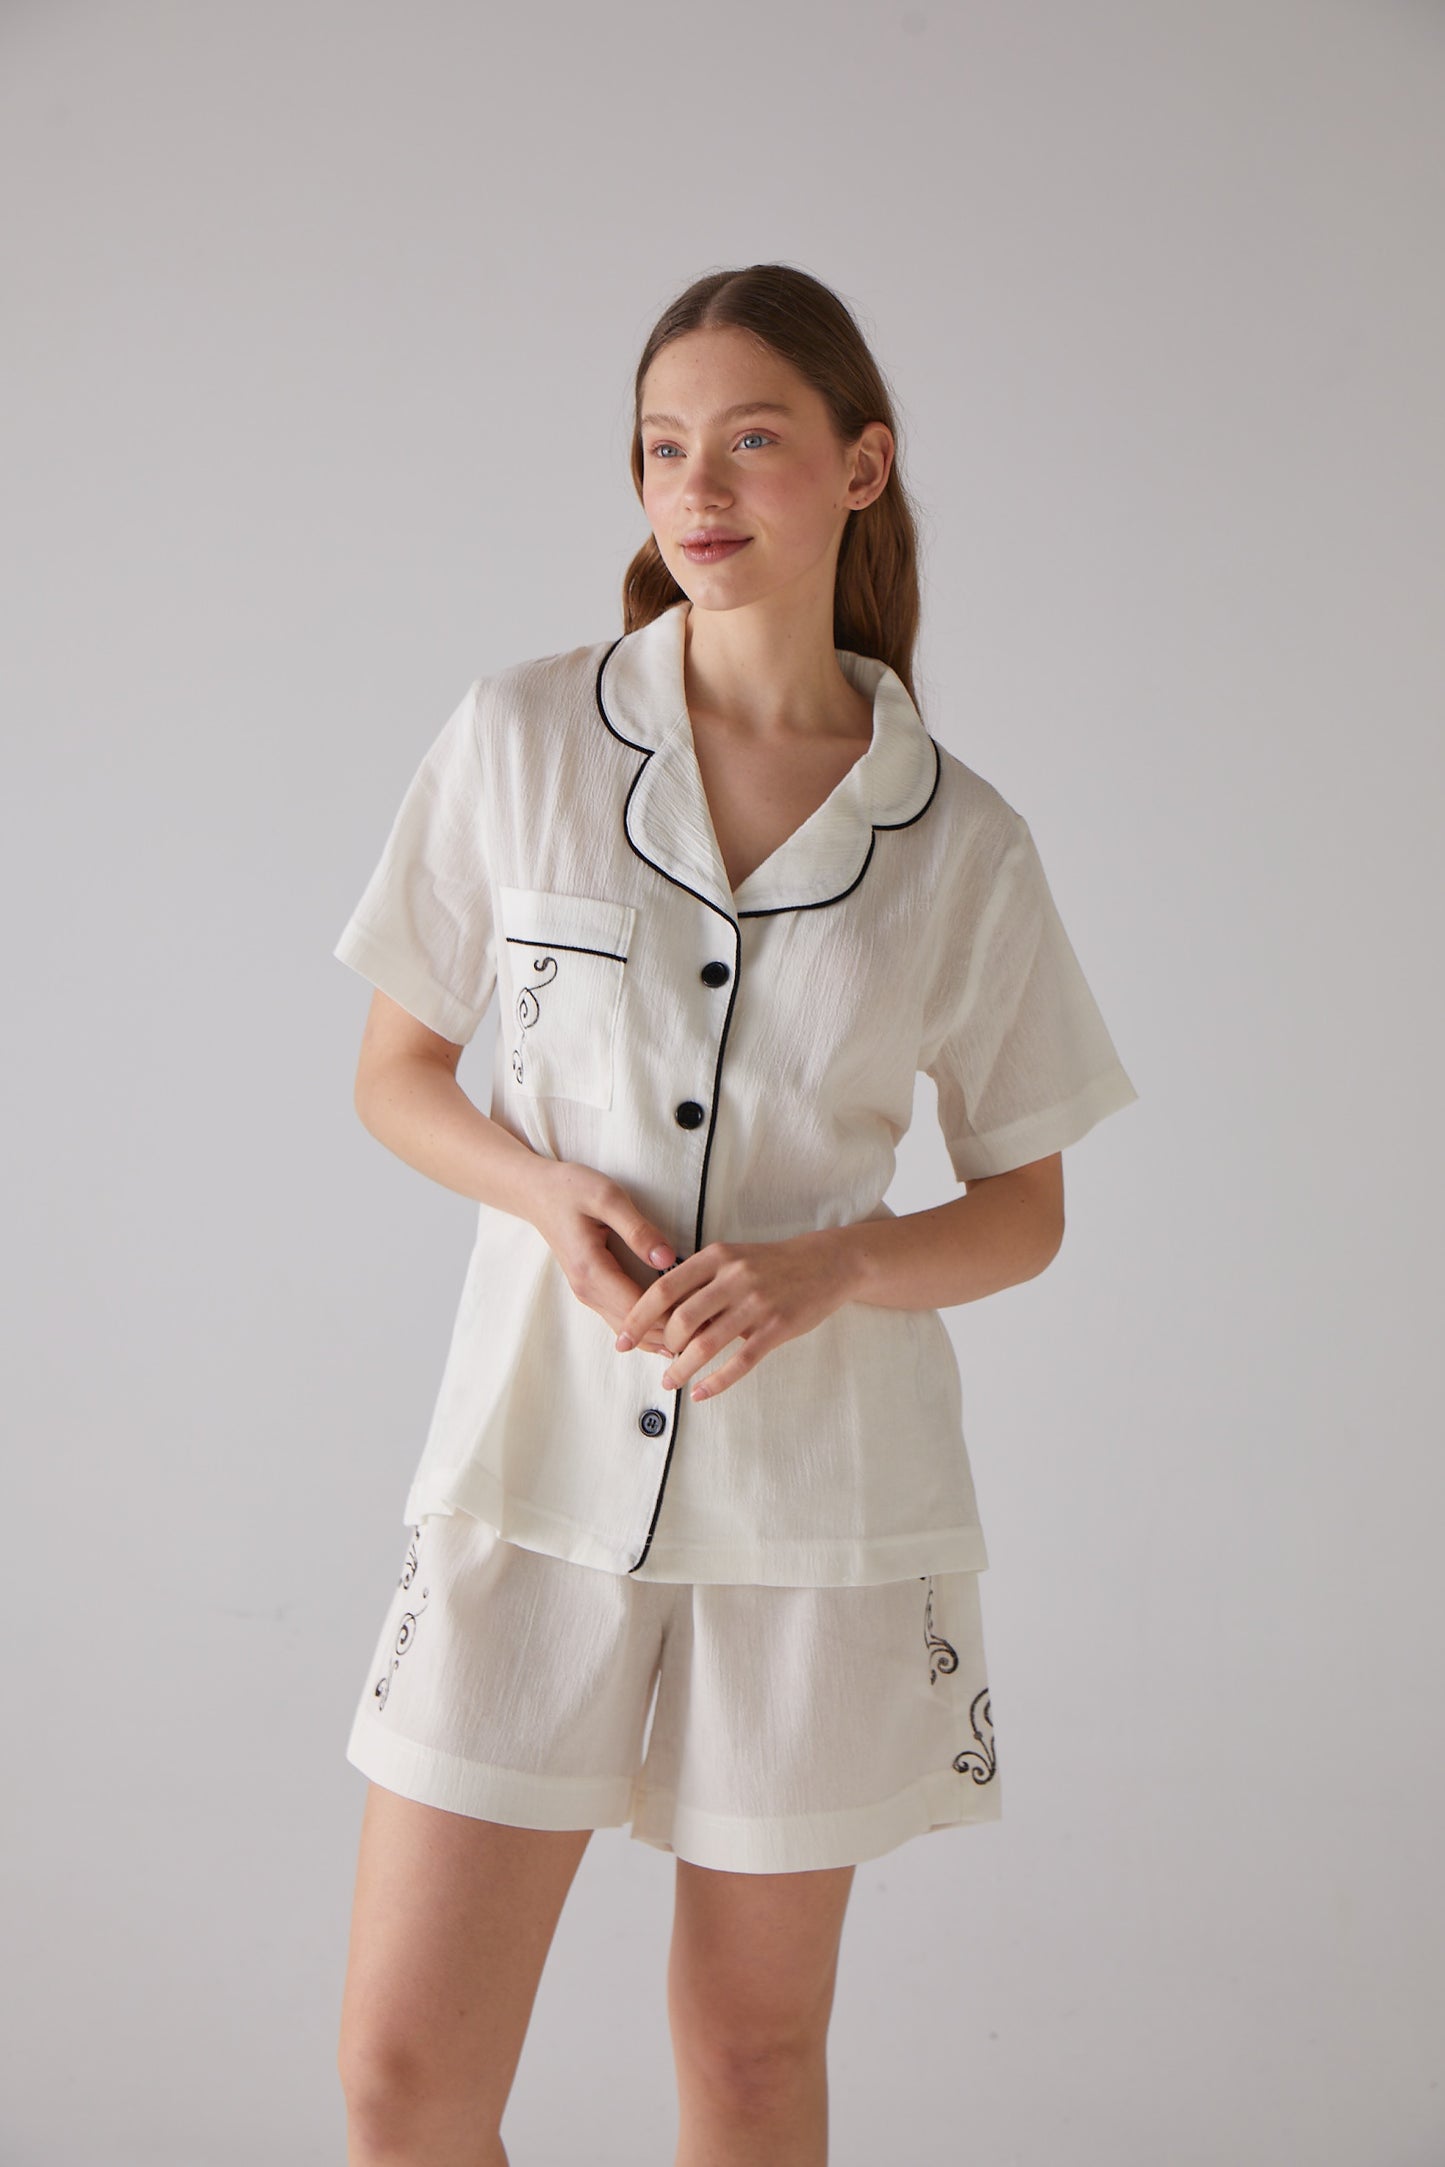 Clef Pattern White Short Pyjama Set - 100% Organic Cotton